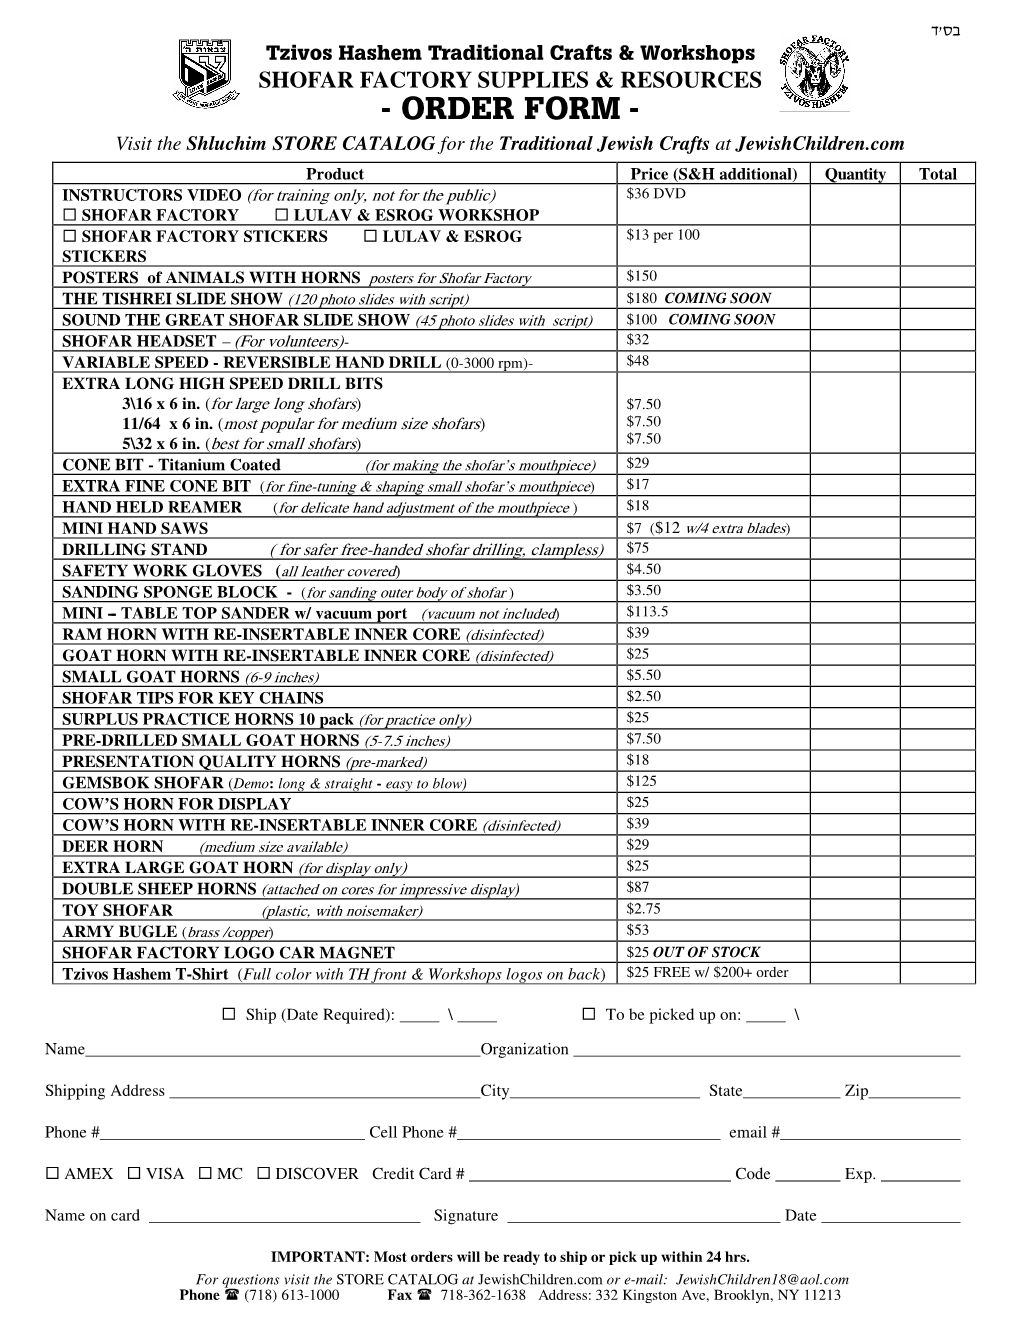 Shofar Factory Supplies Order Form 5778